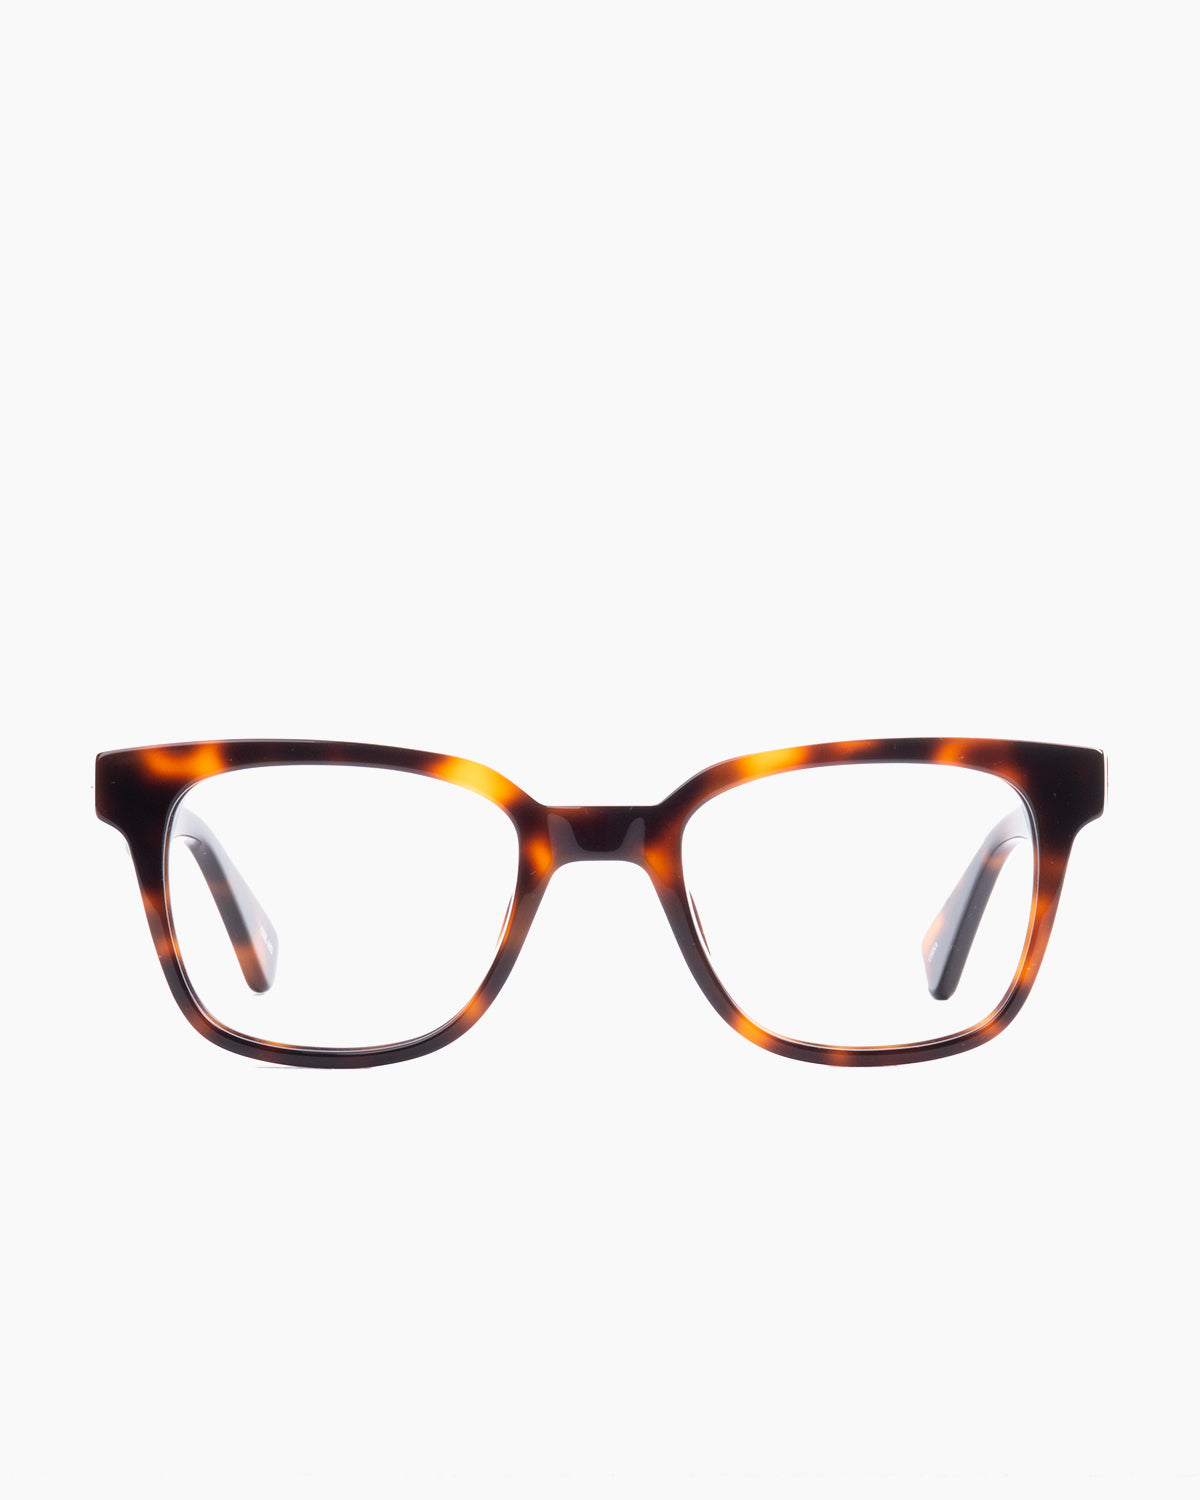 Evolve - Bennett - 102 | Bar à lunettes:  Marie-Sophie Dion